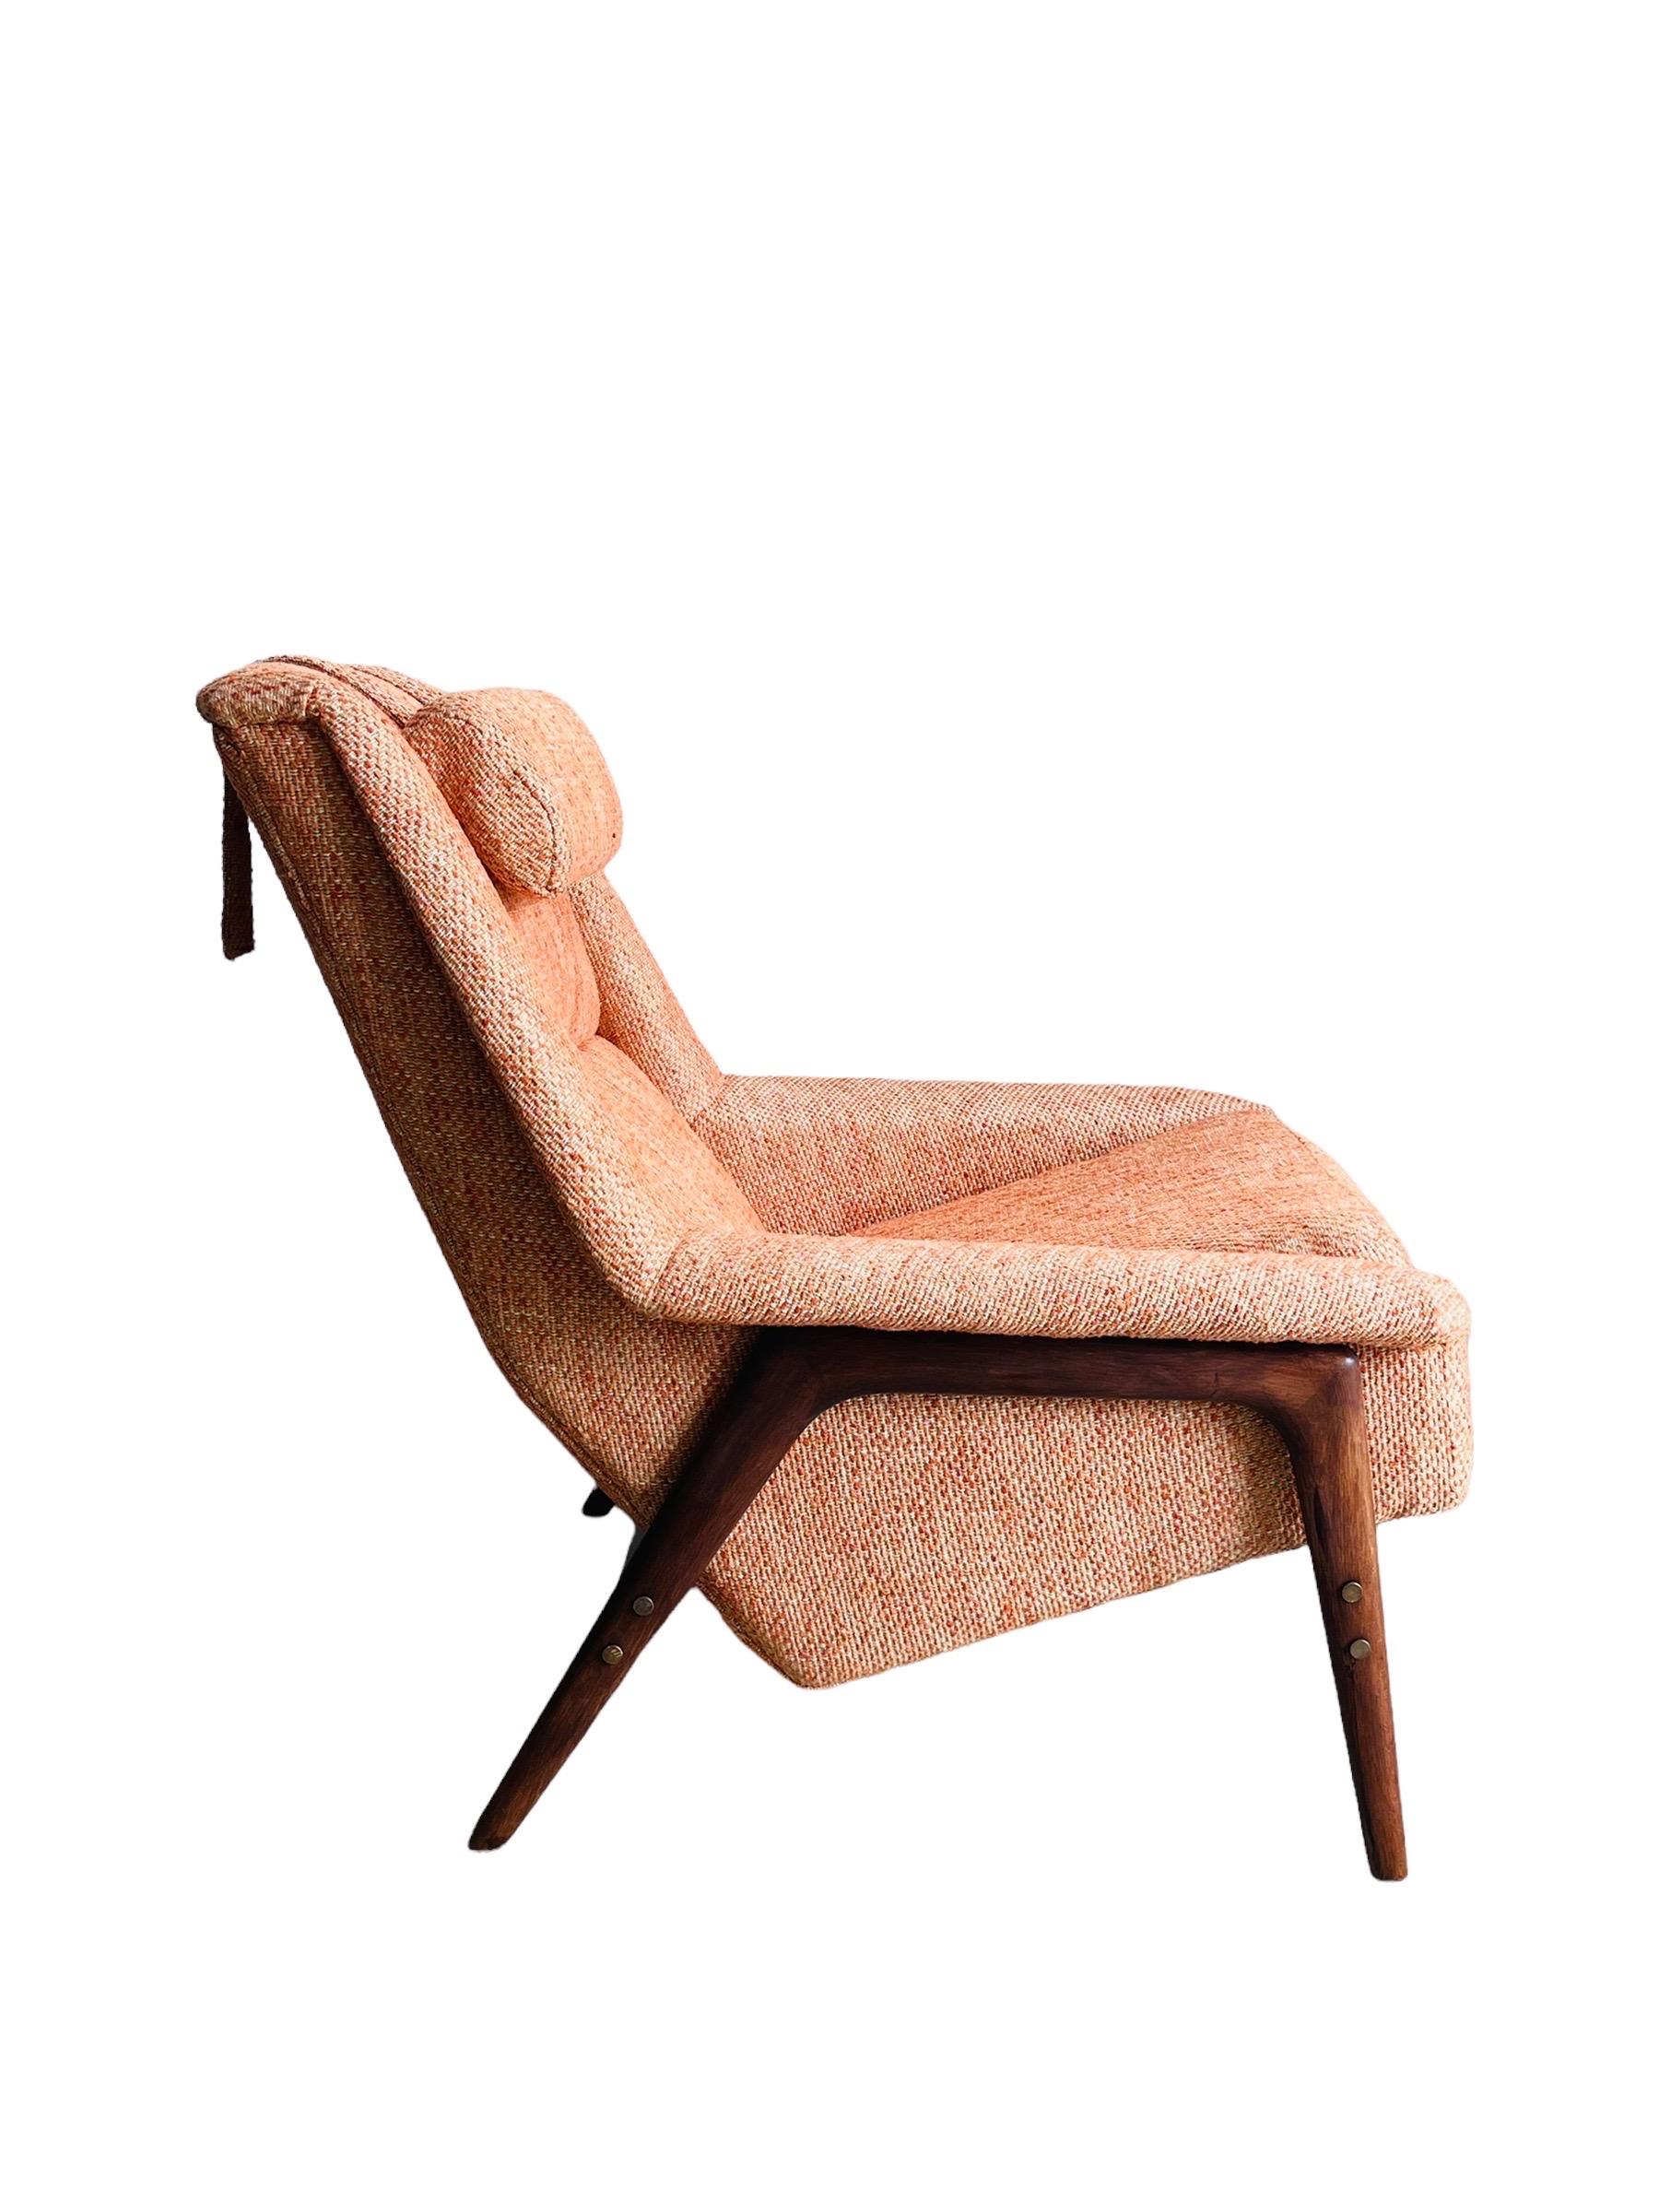 Folke Ohlsson Walnut Lounge Chair & Ottoman for DUX 1